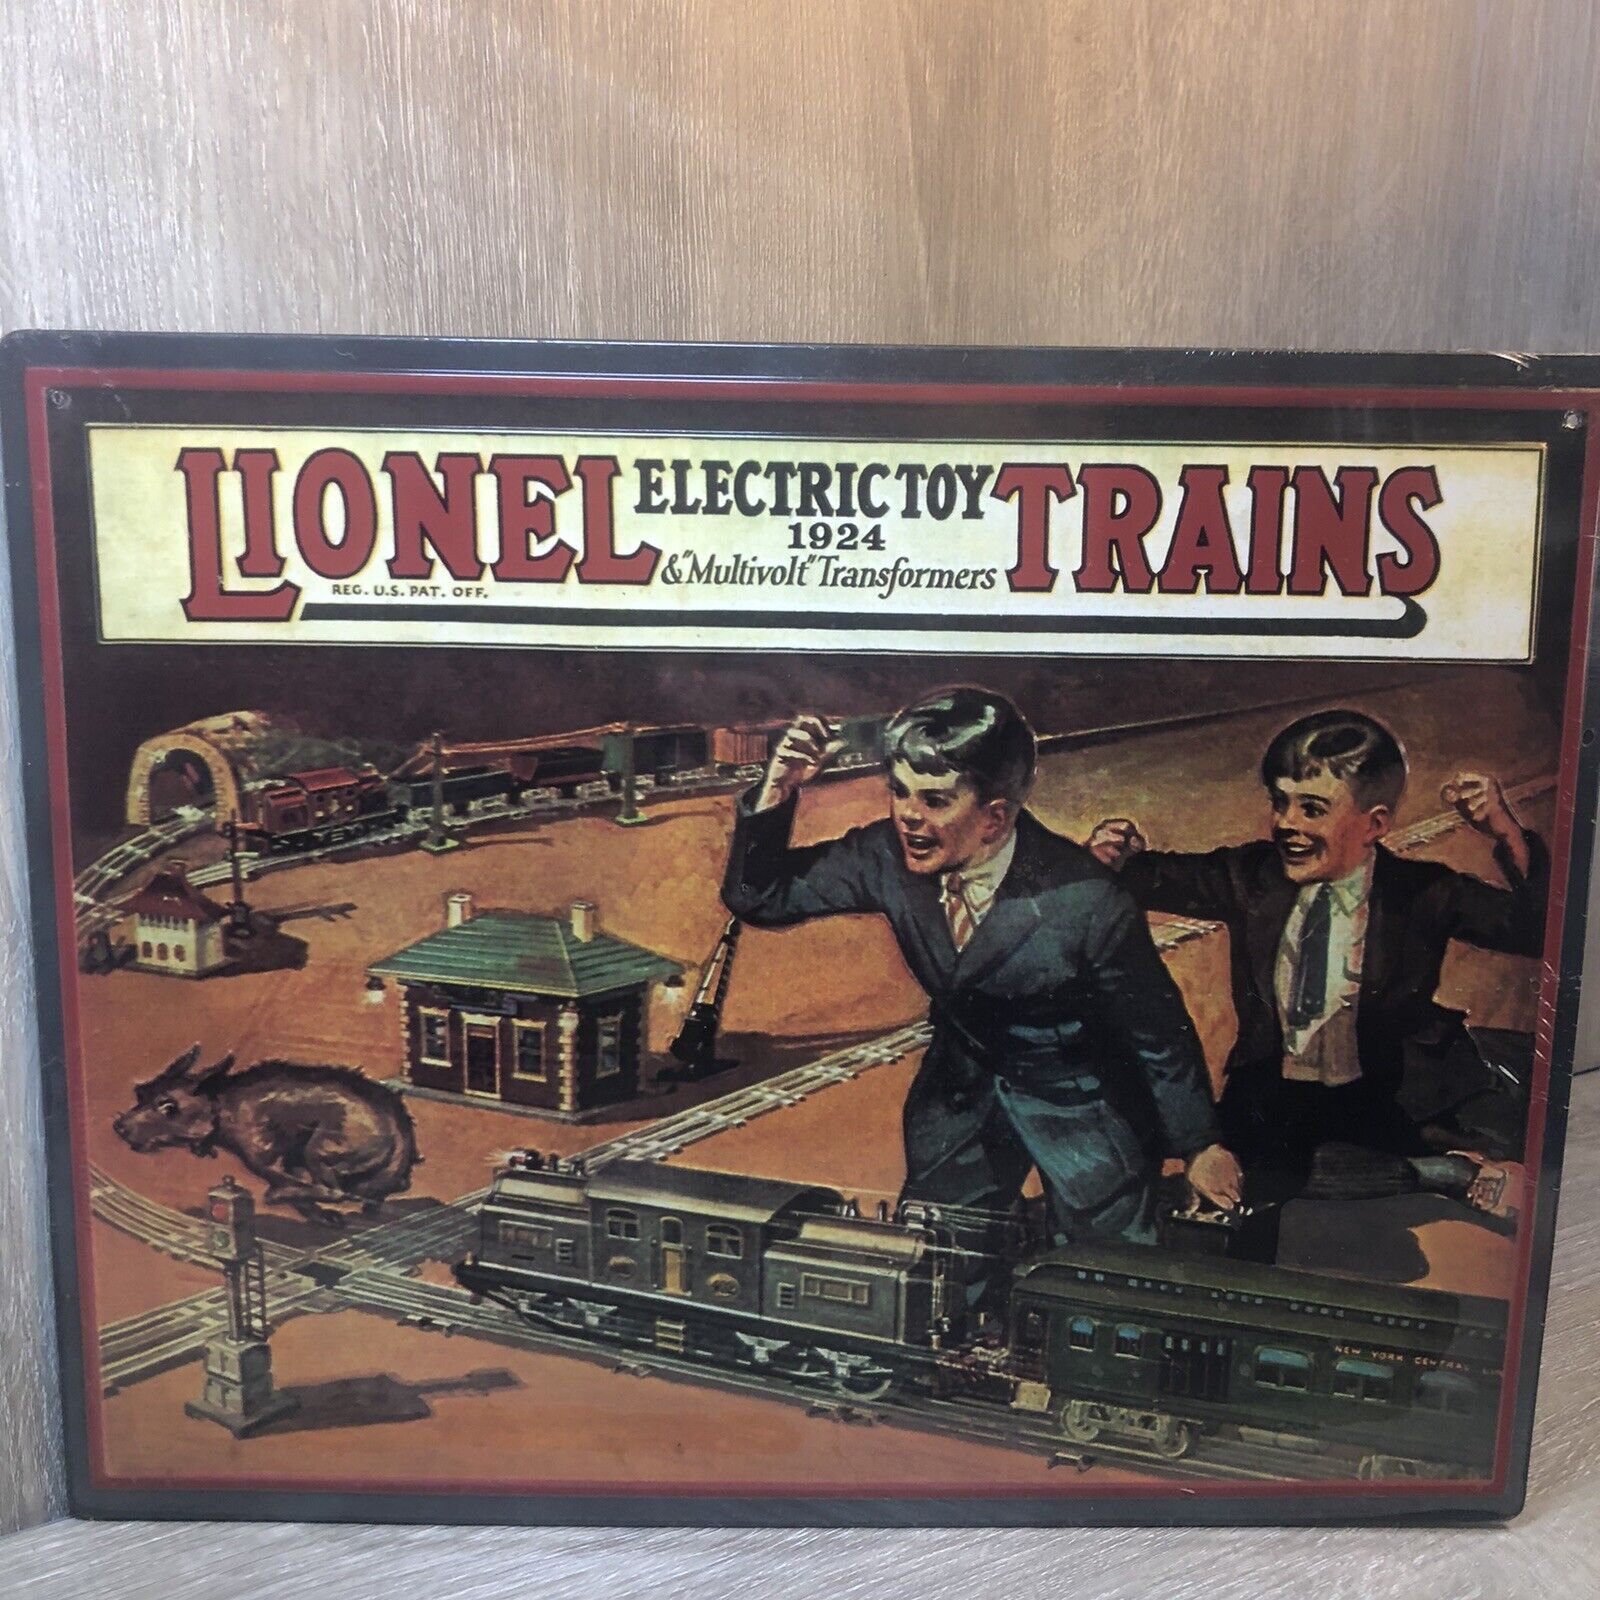 Hallmark Great American Railways:  1924 Lionel Catalog Cover Tin Sign (QHT3706)